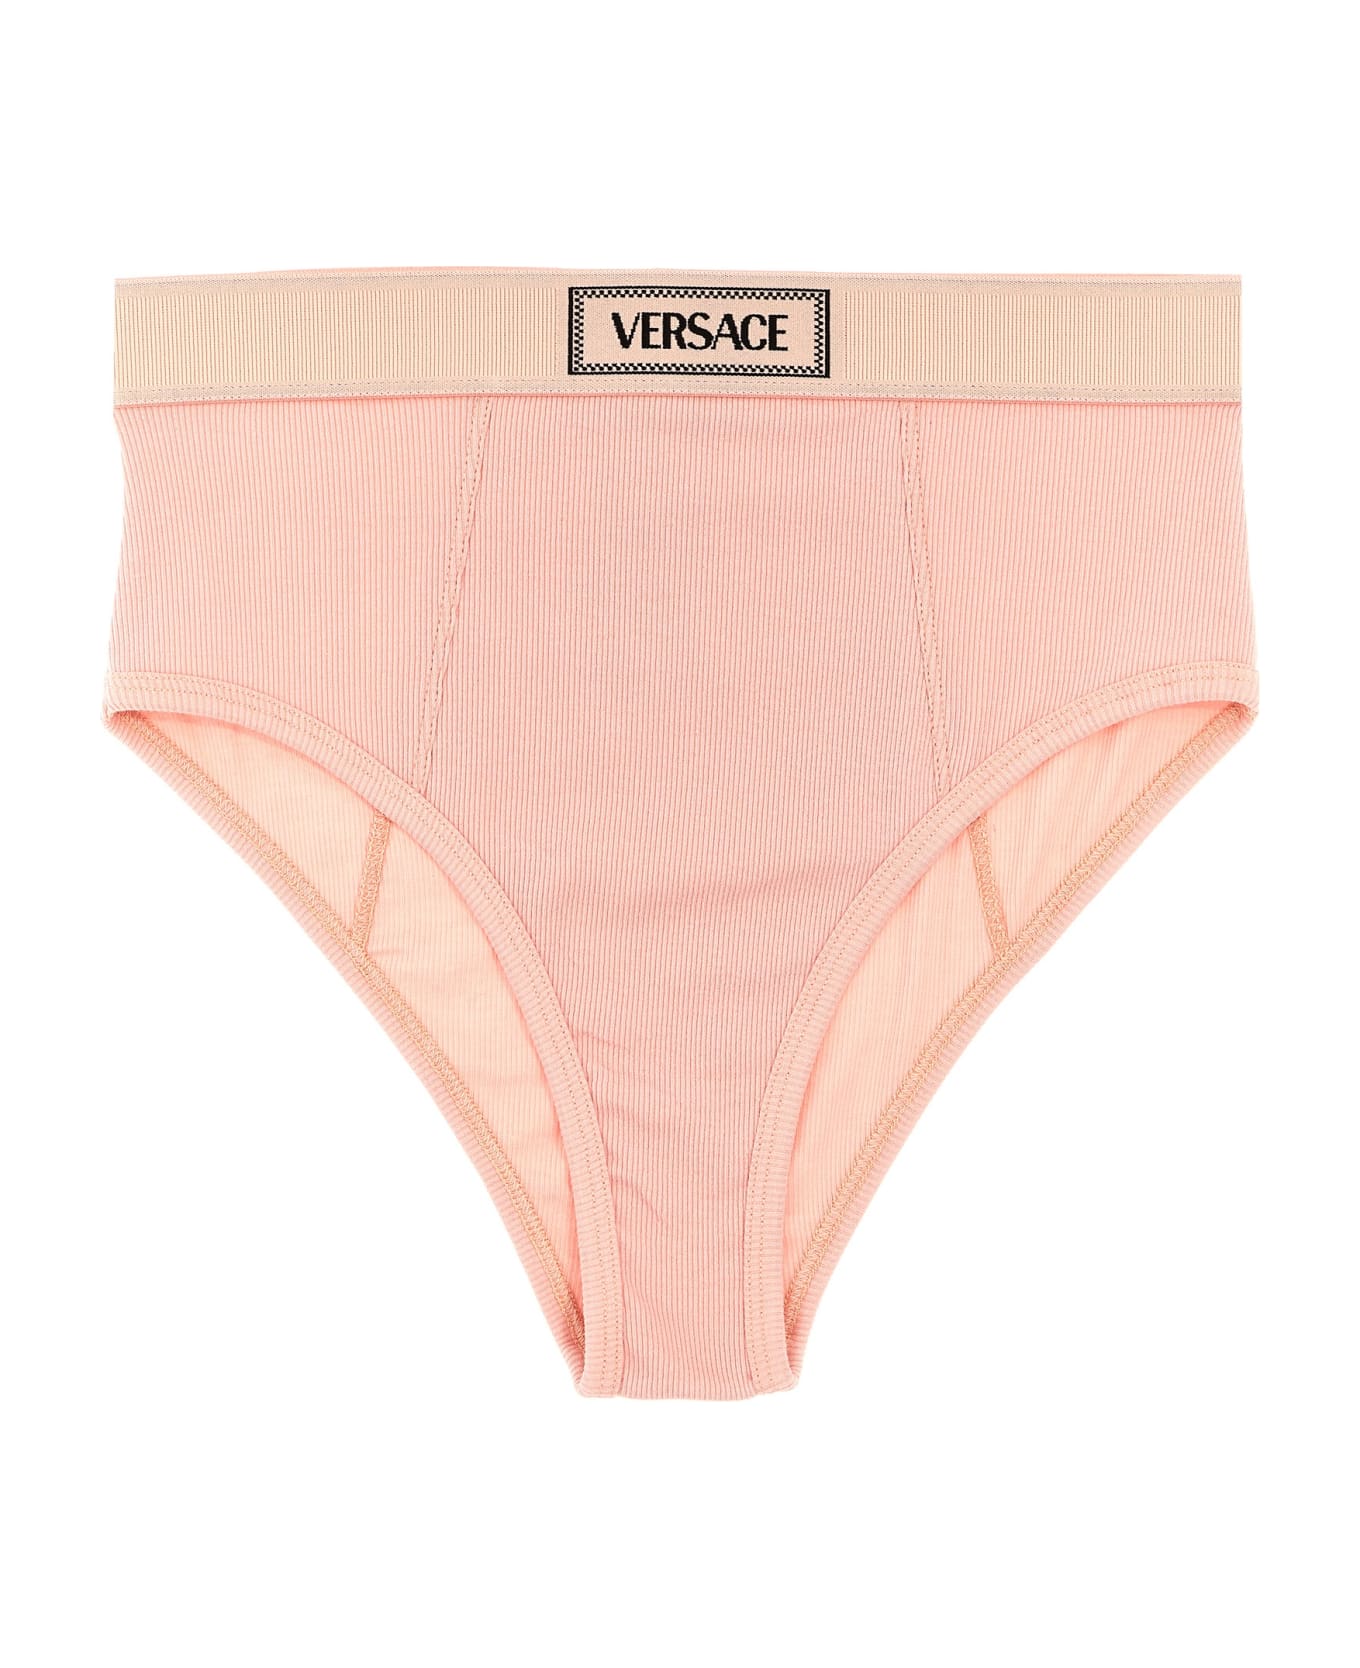 Versace '90s Vintage' Briefs - Pink